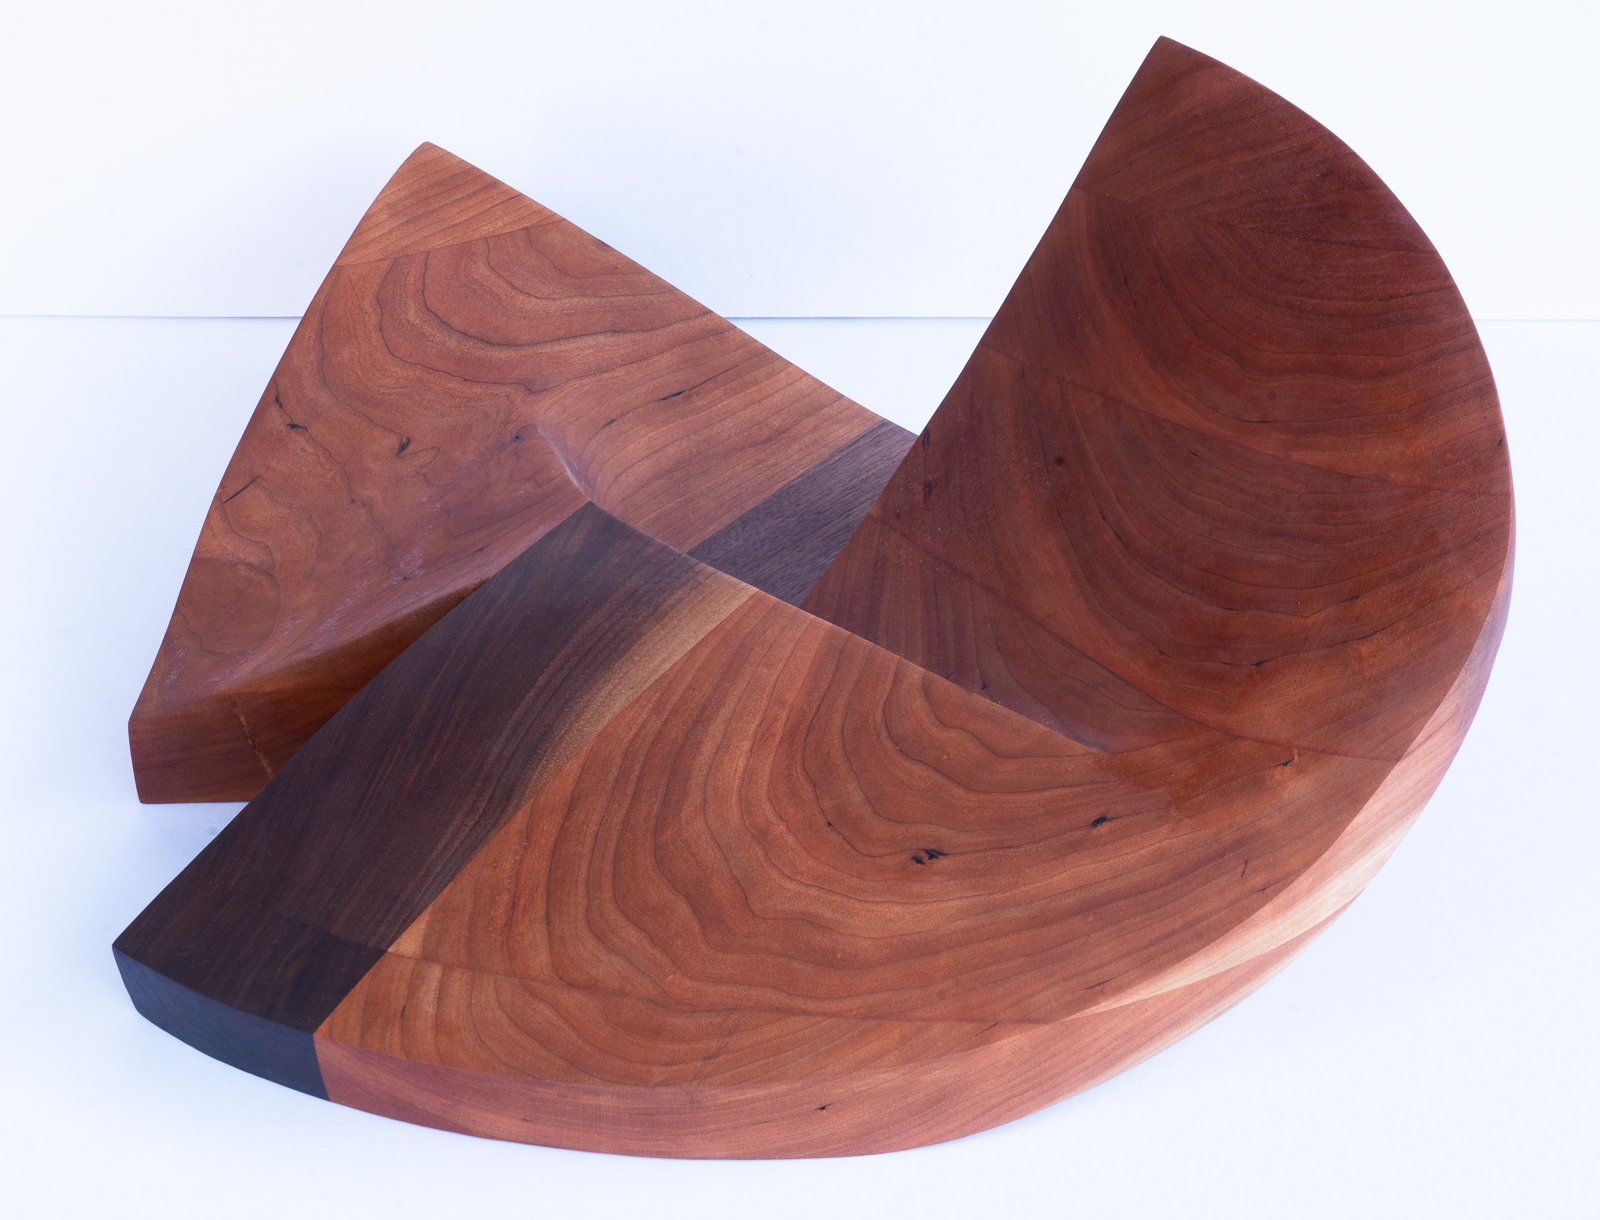 Ross  Stockwell, A Restless Object, 2022. Wood (cherry, walnut), 20” x 18.5” x 9”.